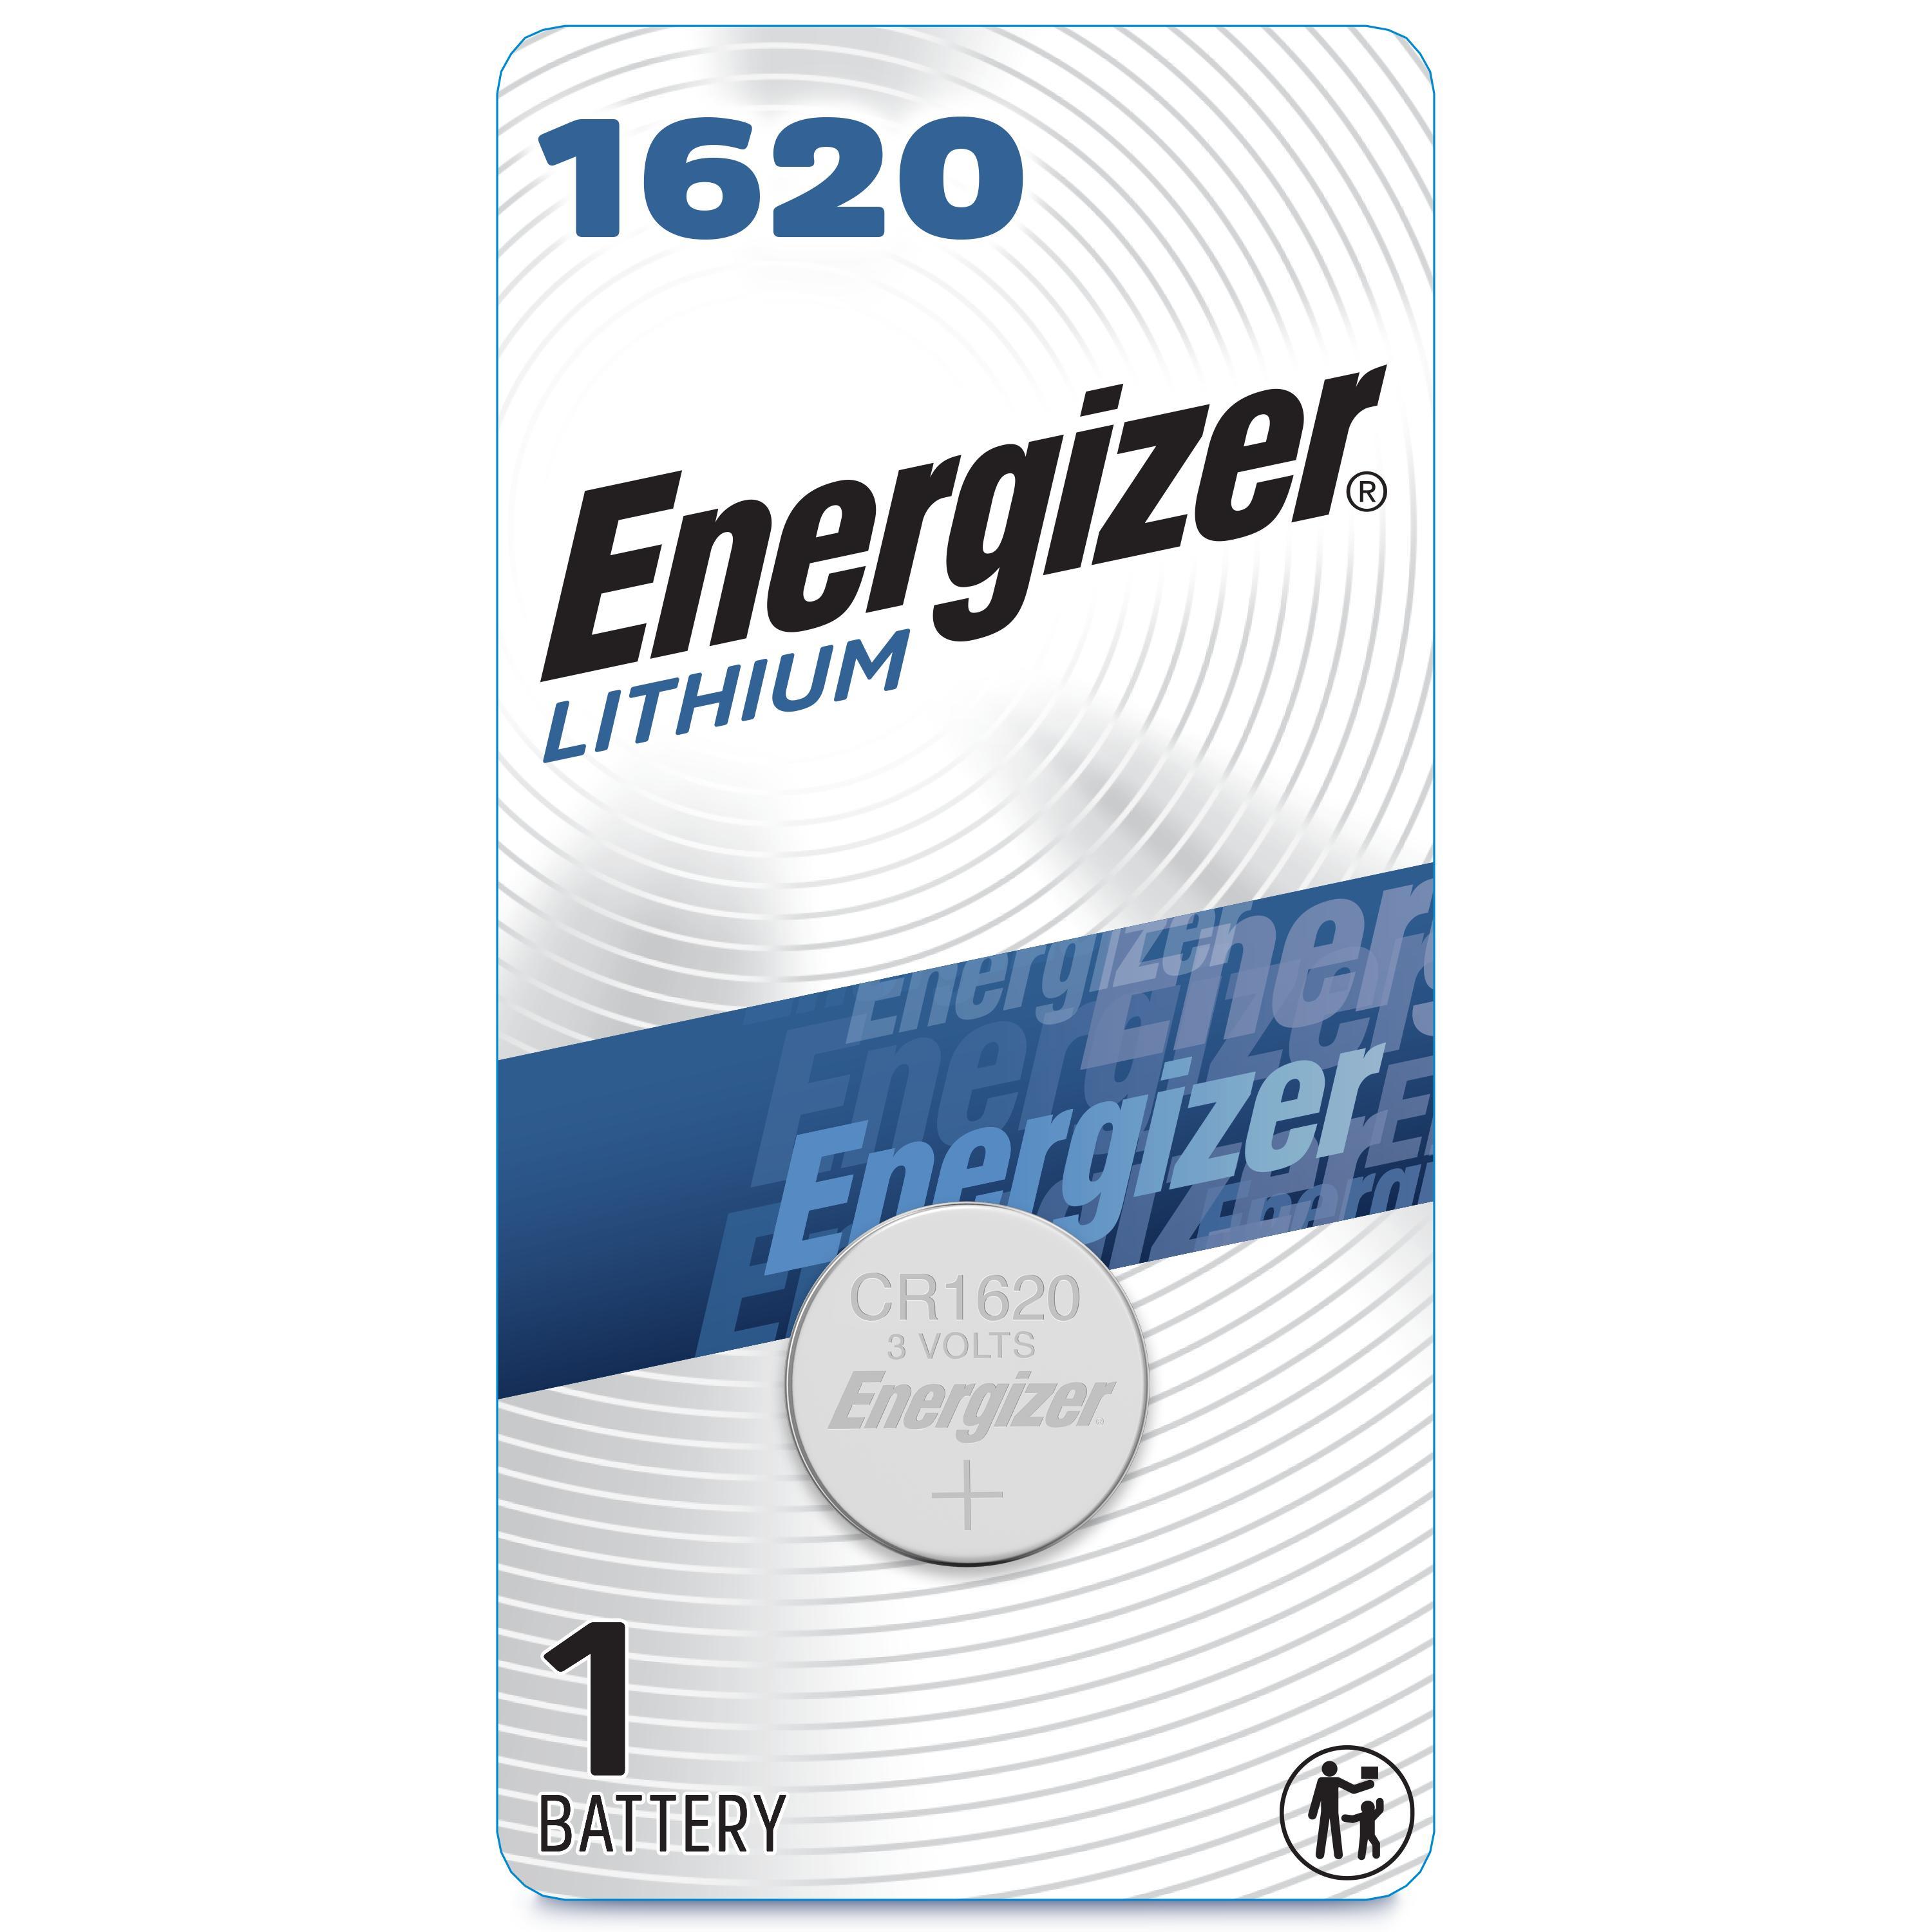 Energizer® CR1620